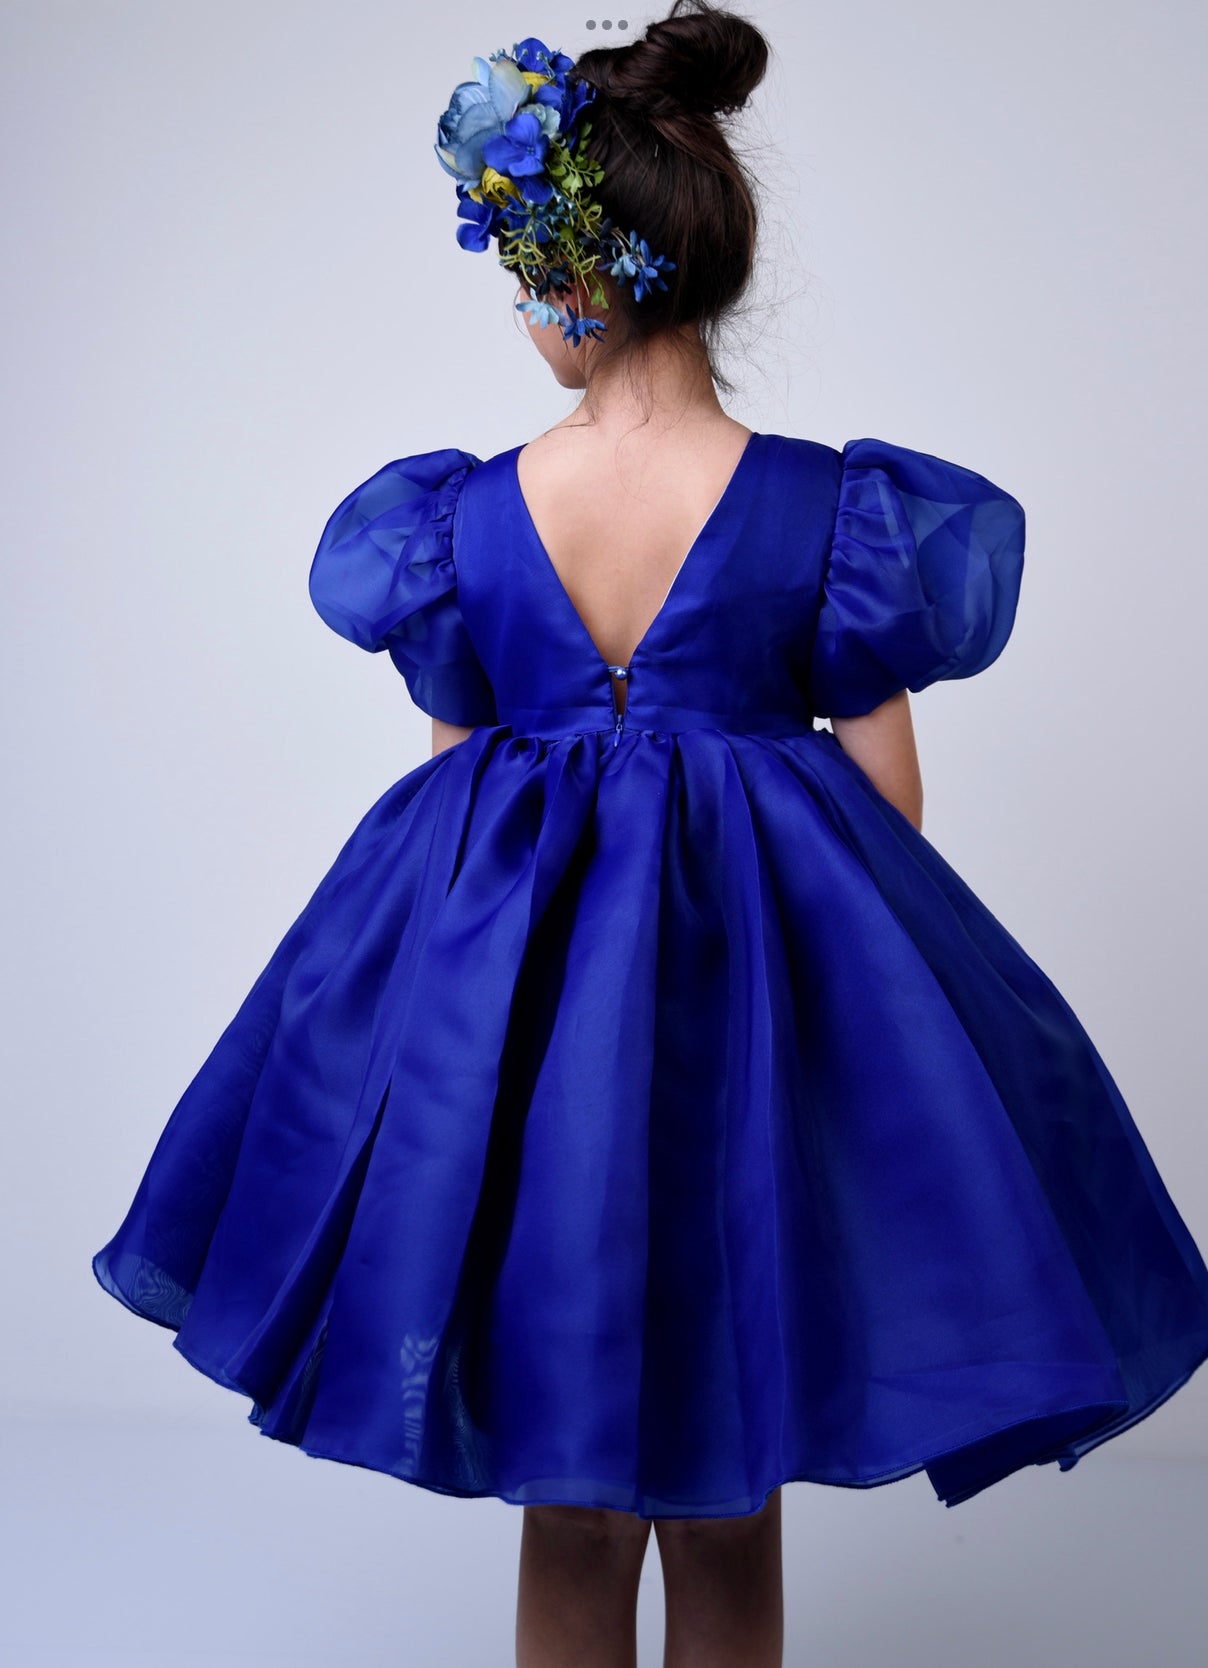 Sapphire blue tulle volume dress